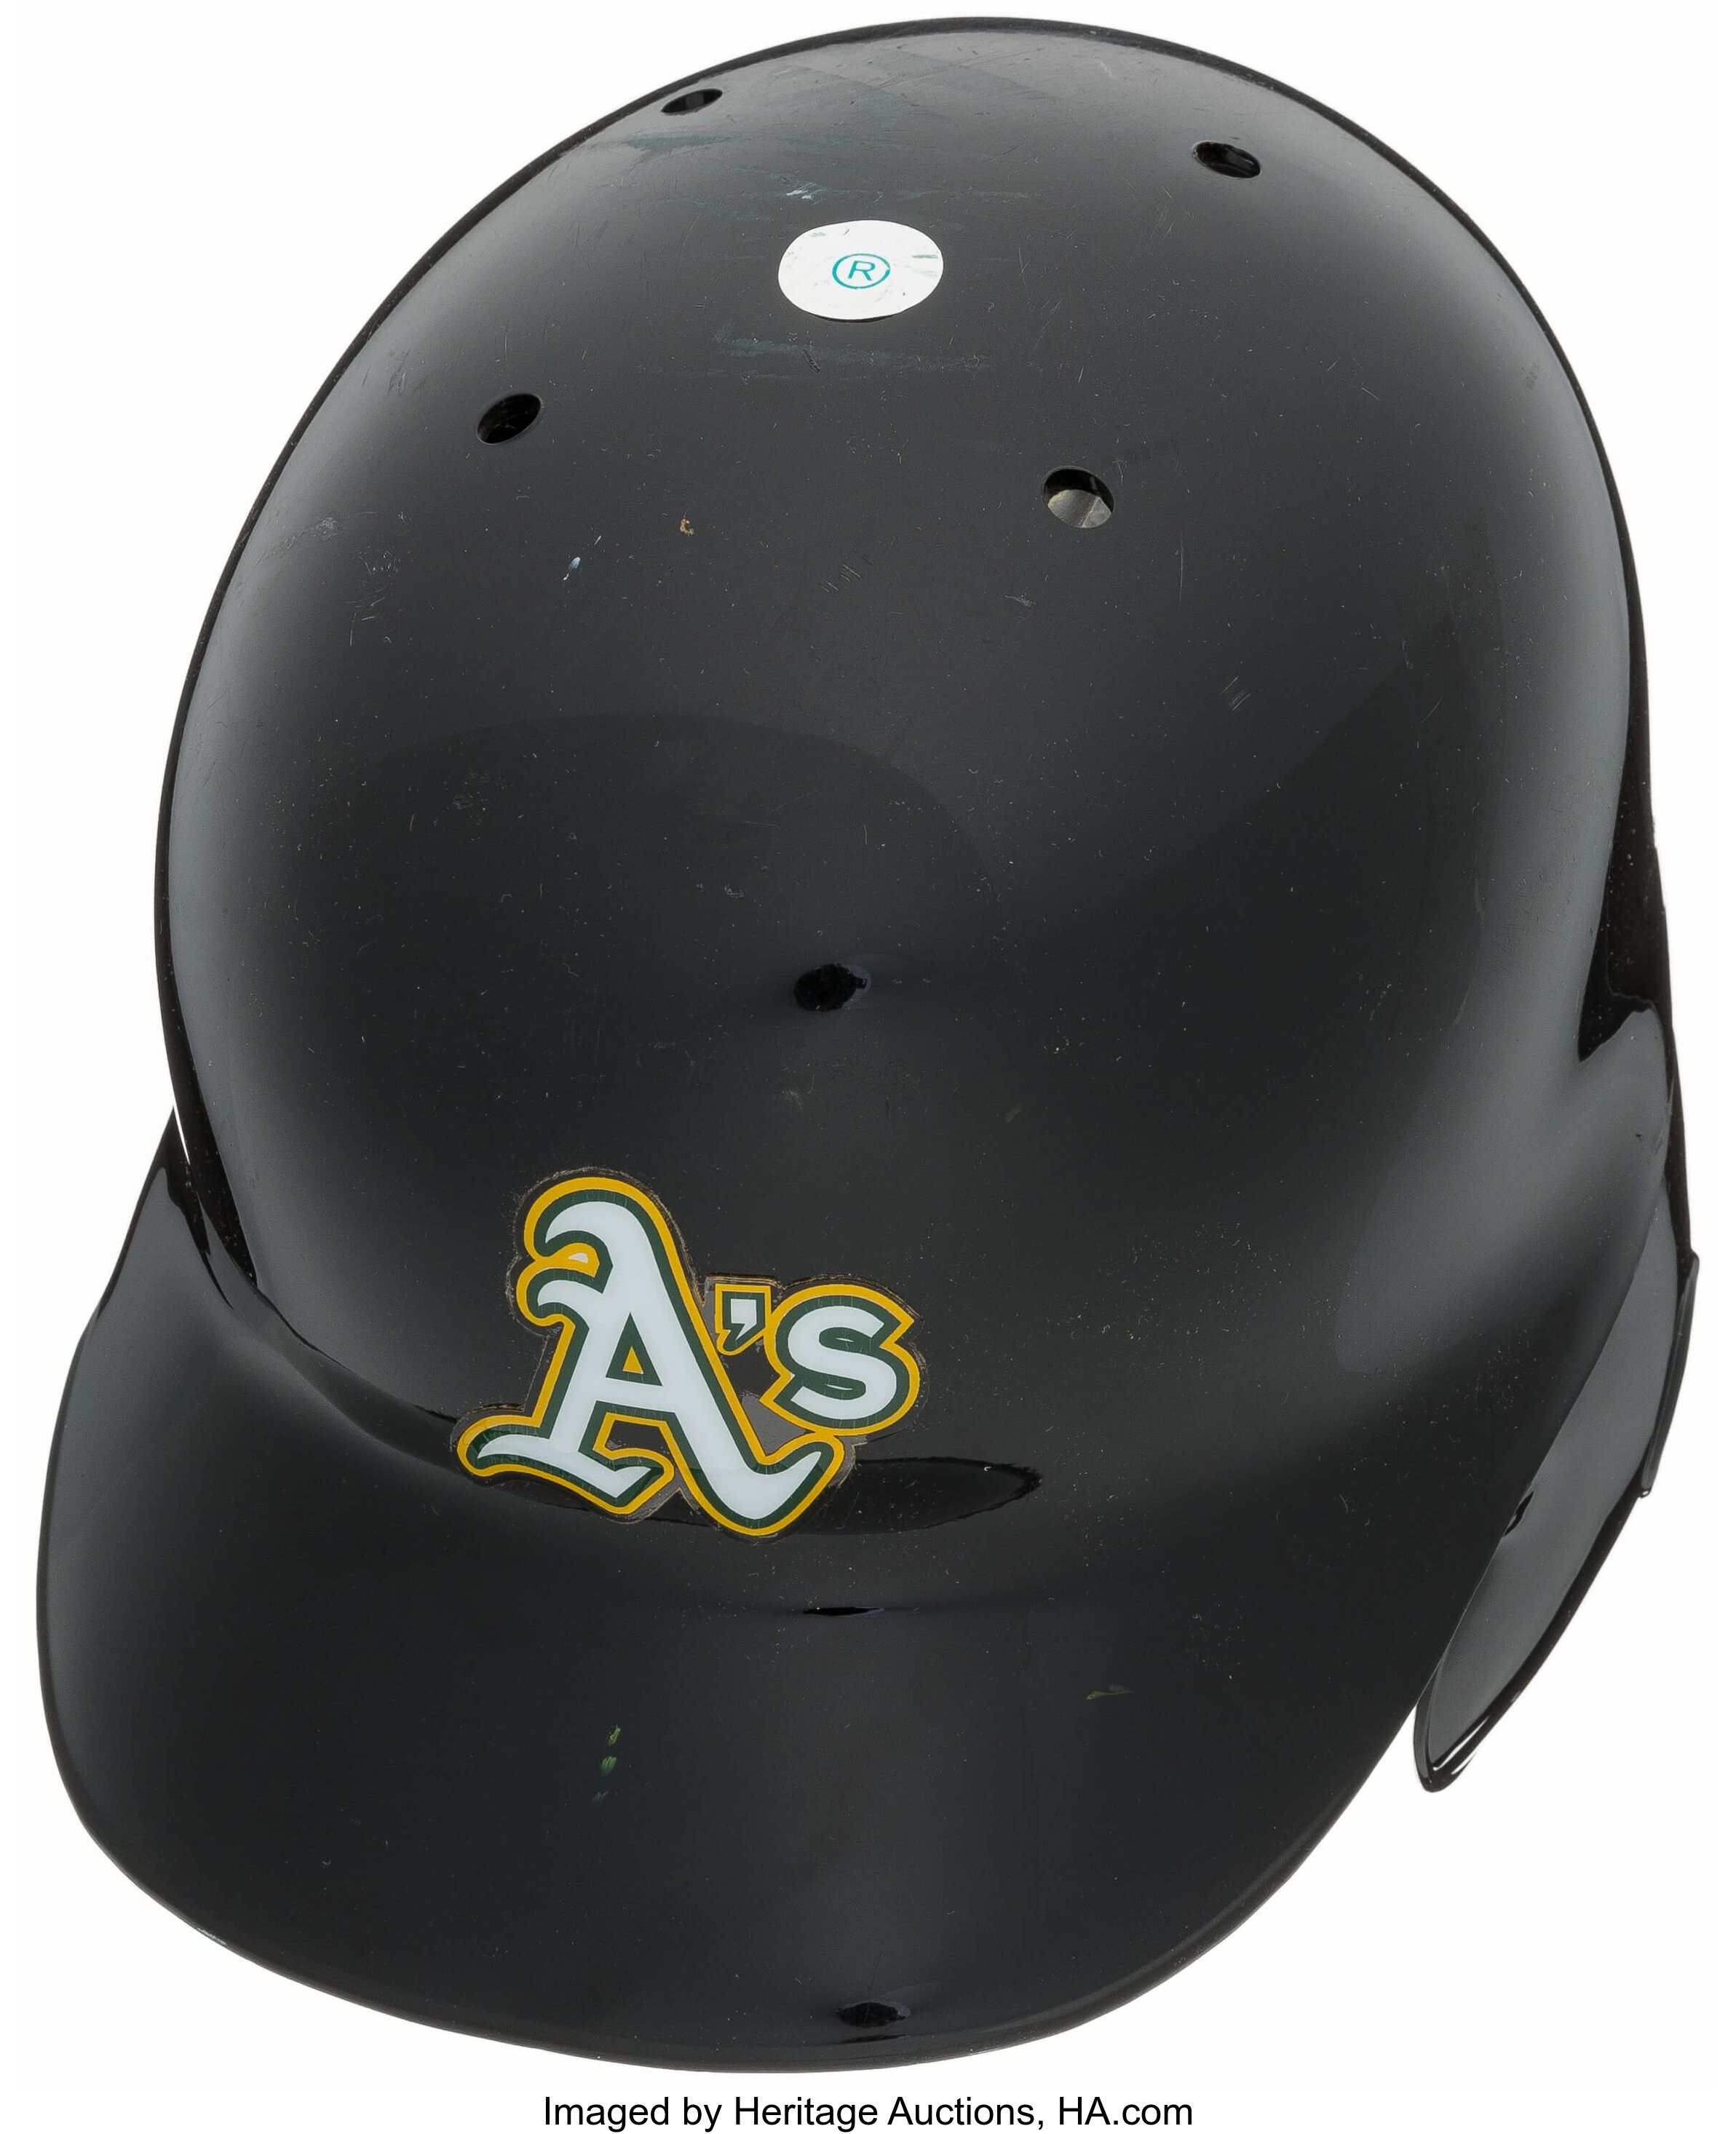 2010 Coco Crisp Oakland Athletics Game Worn Batting Helmet., Lot #41165